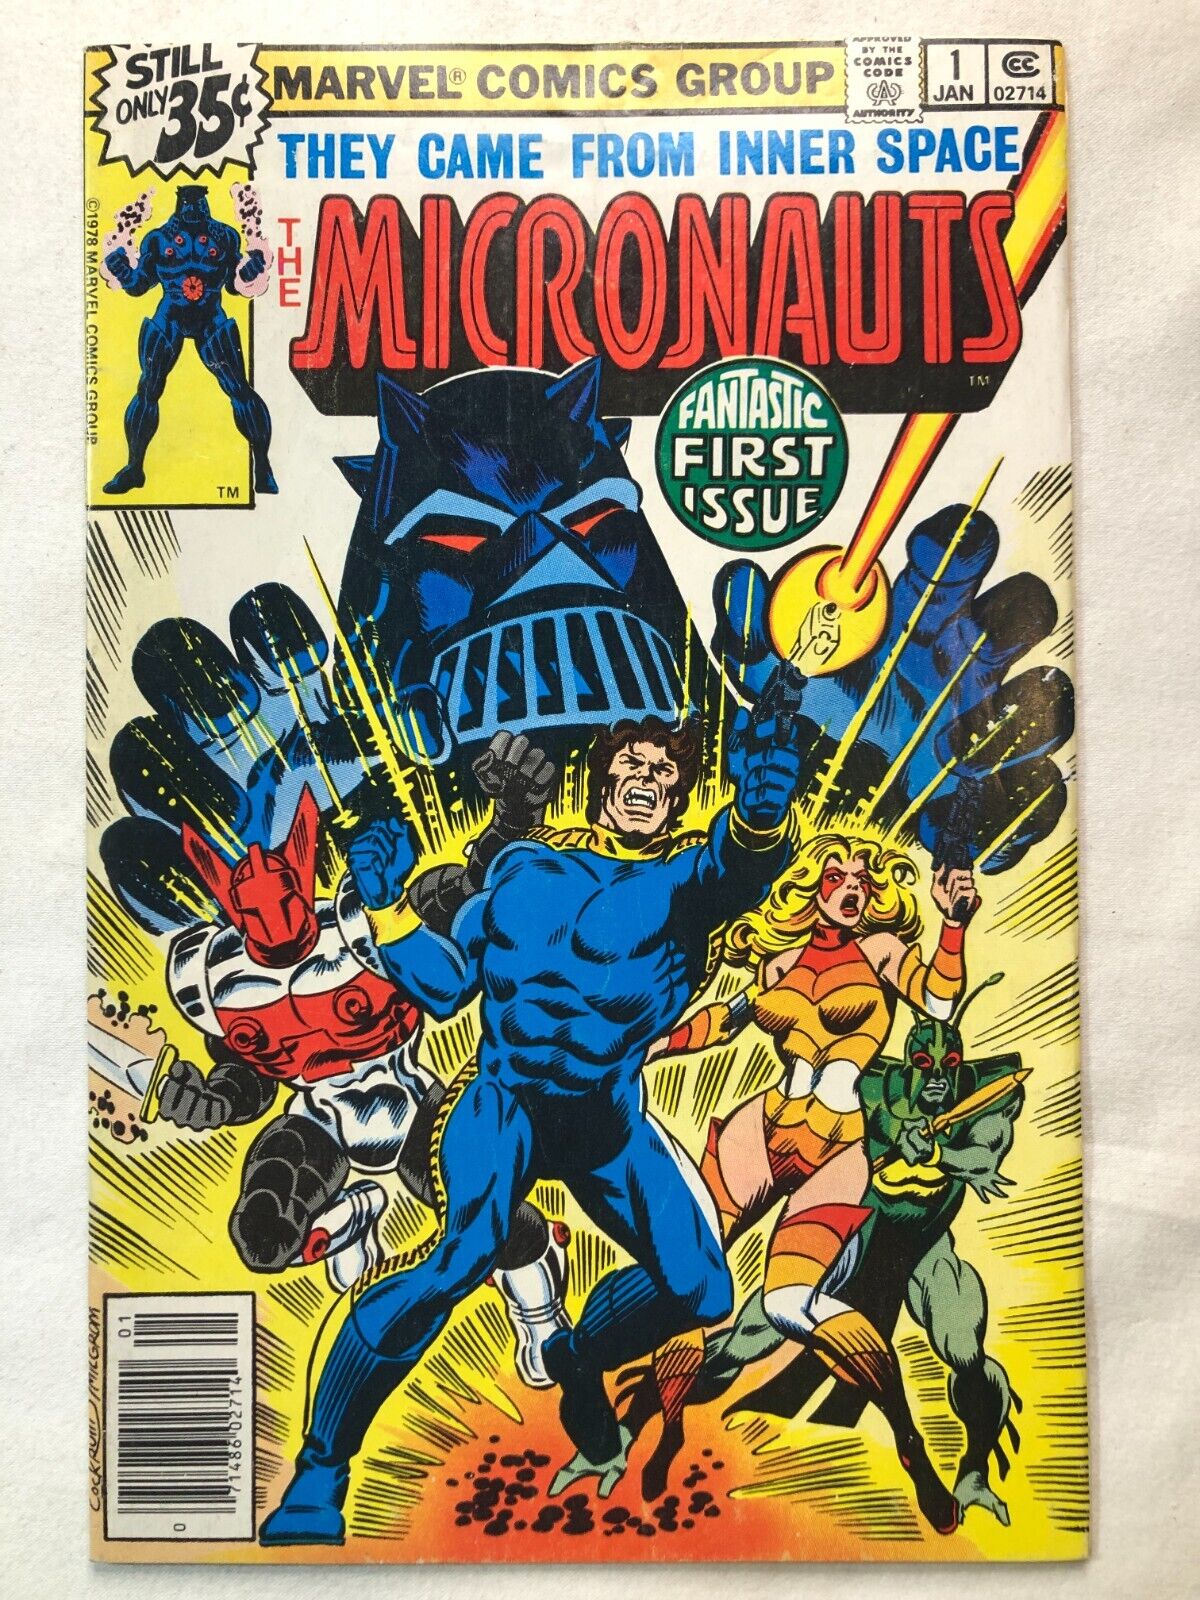 The Micronauts #1 January 1979 Homeworld  1st Appearance of the Micronauts